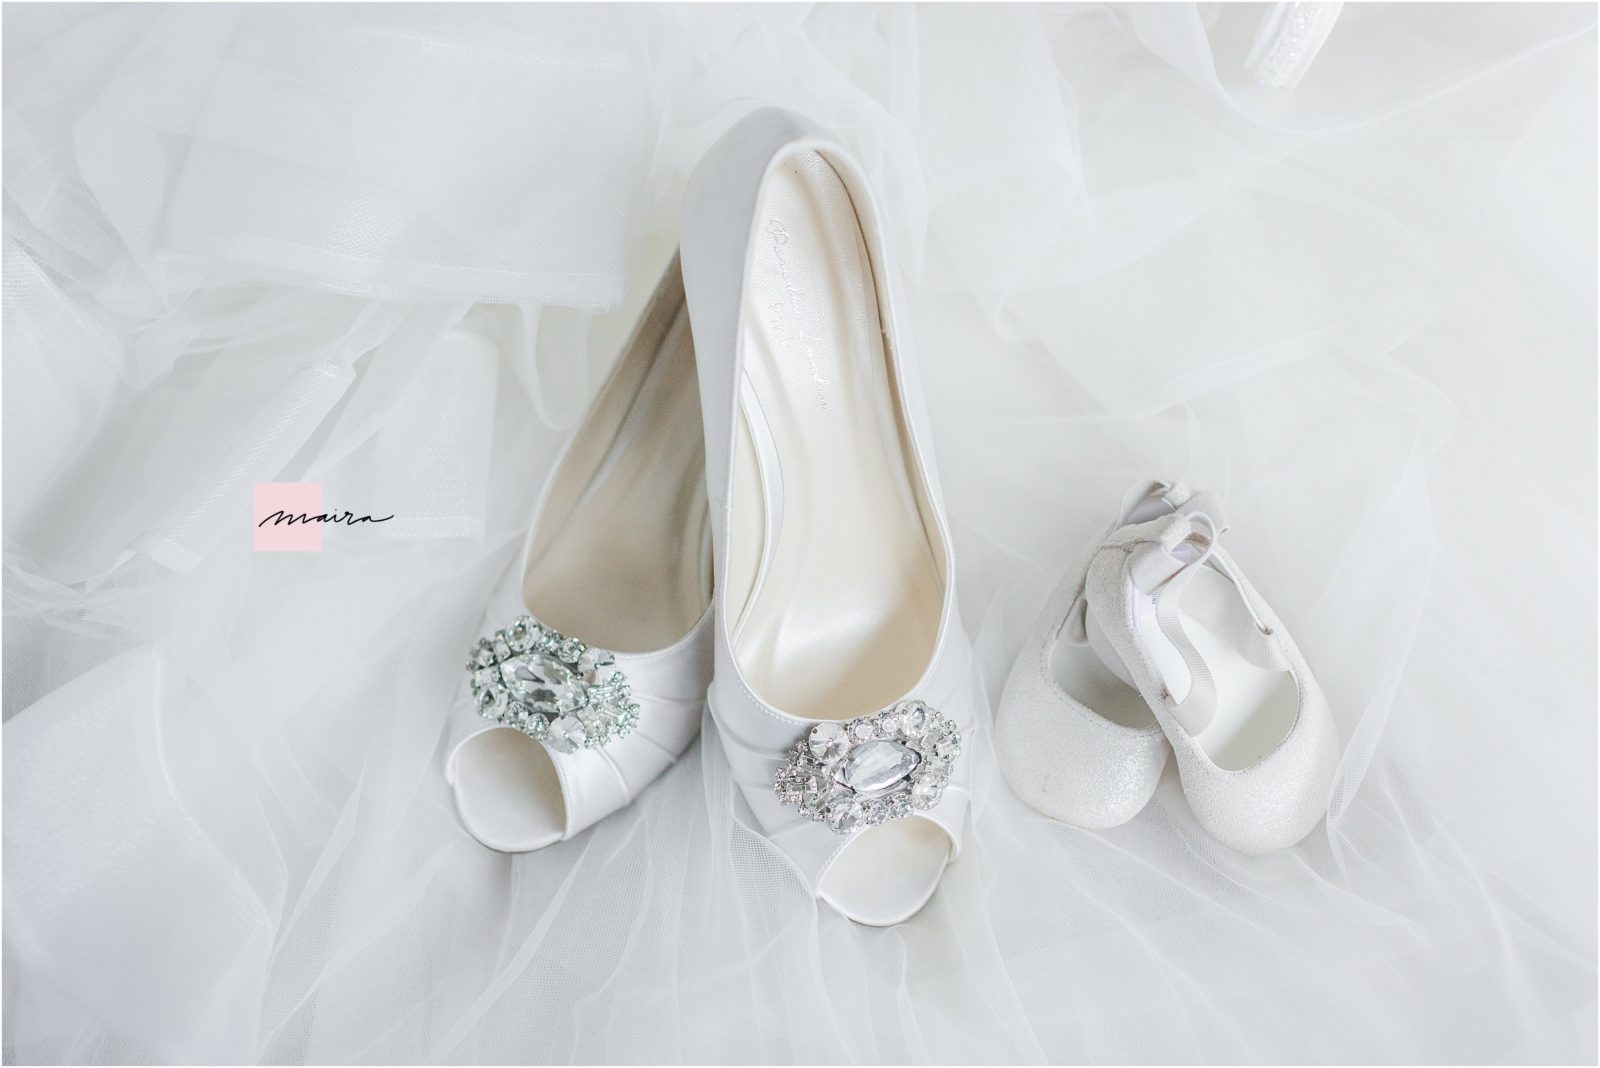 Oakbrook wedding in Drury Lane Wedding Details, Brides shoes and invitations, wedding bands, wedding rings